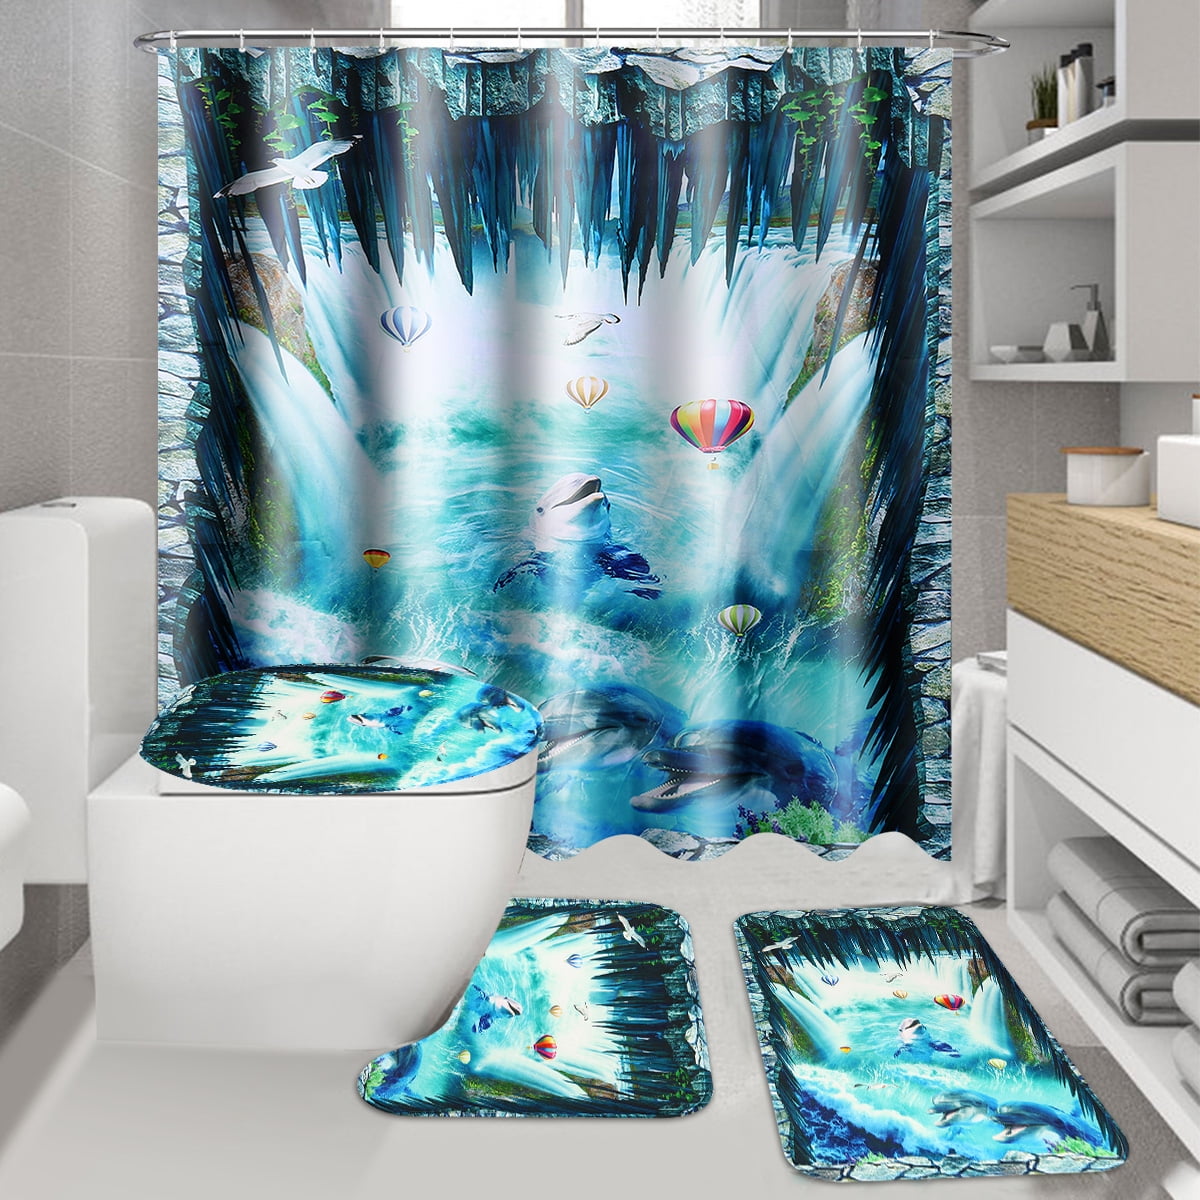 Spider-man 4PCS Bathroom Shower Curtain Floor Mat Non-Slip Toilet Lid Cover Deco 